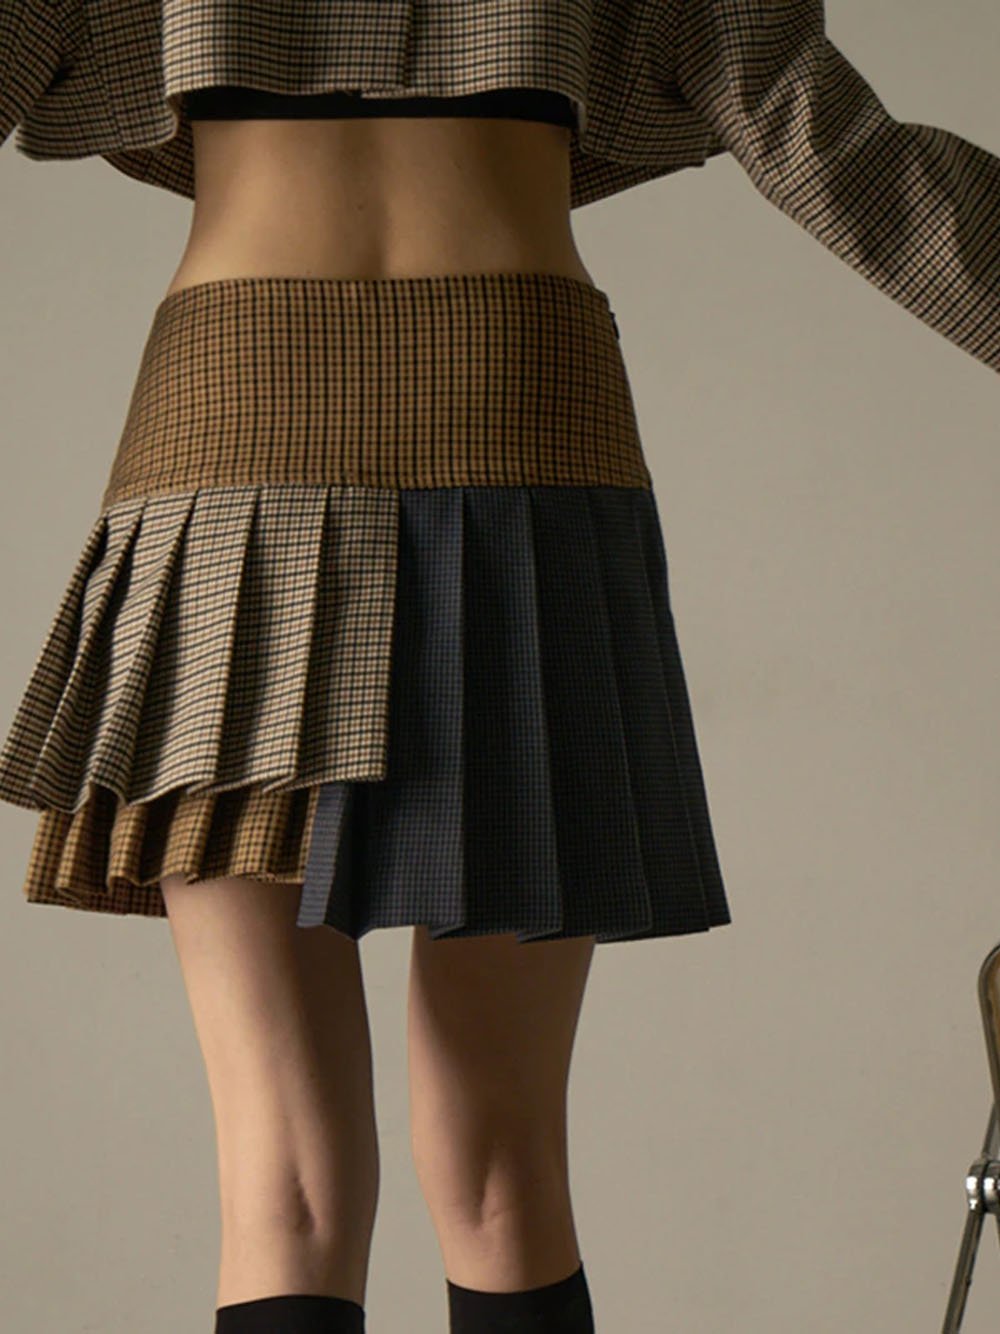 LIMANE Top & Skirt Set